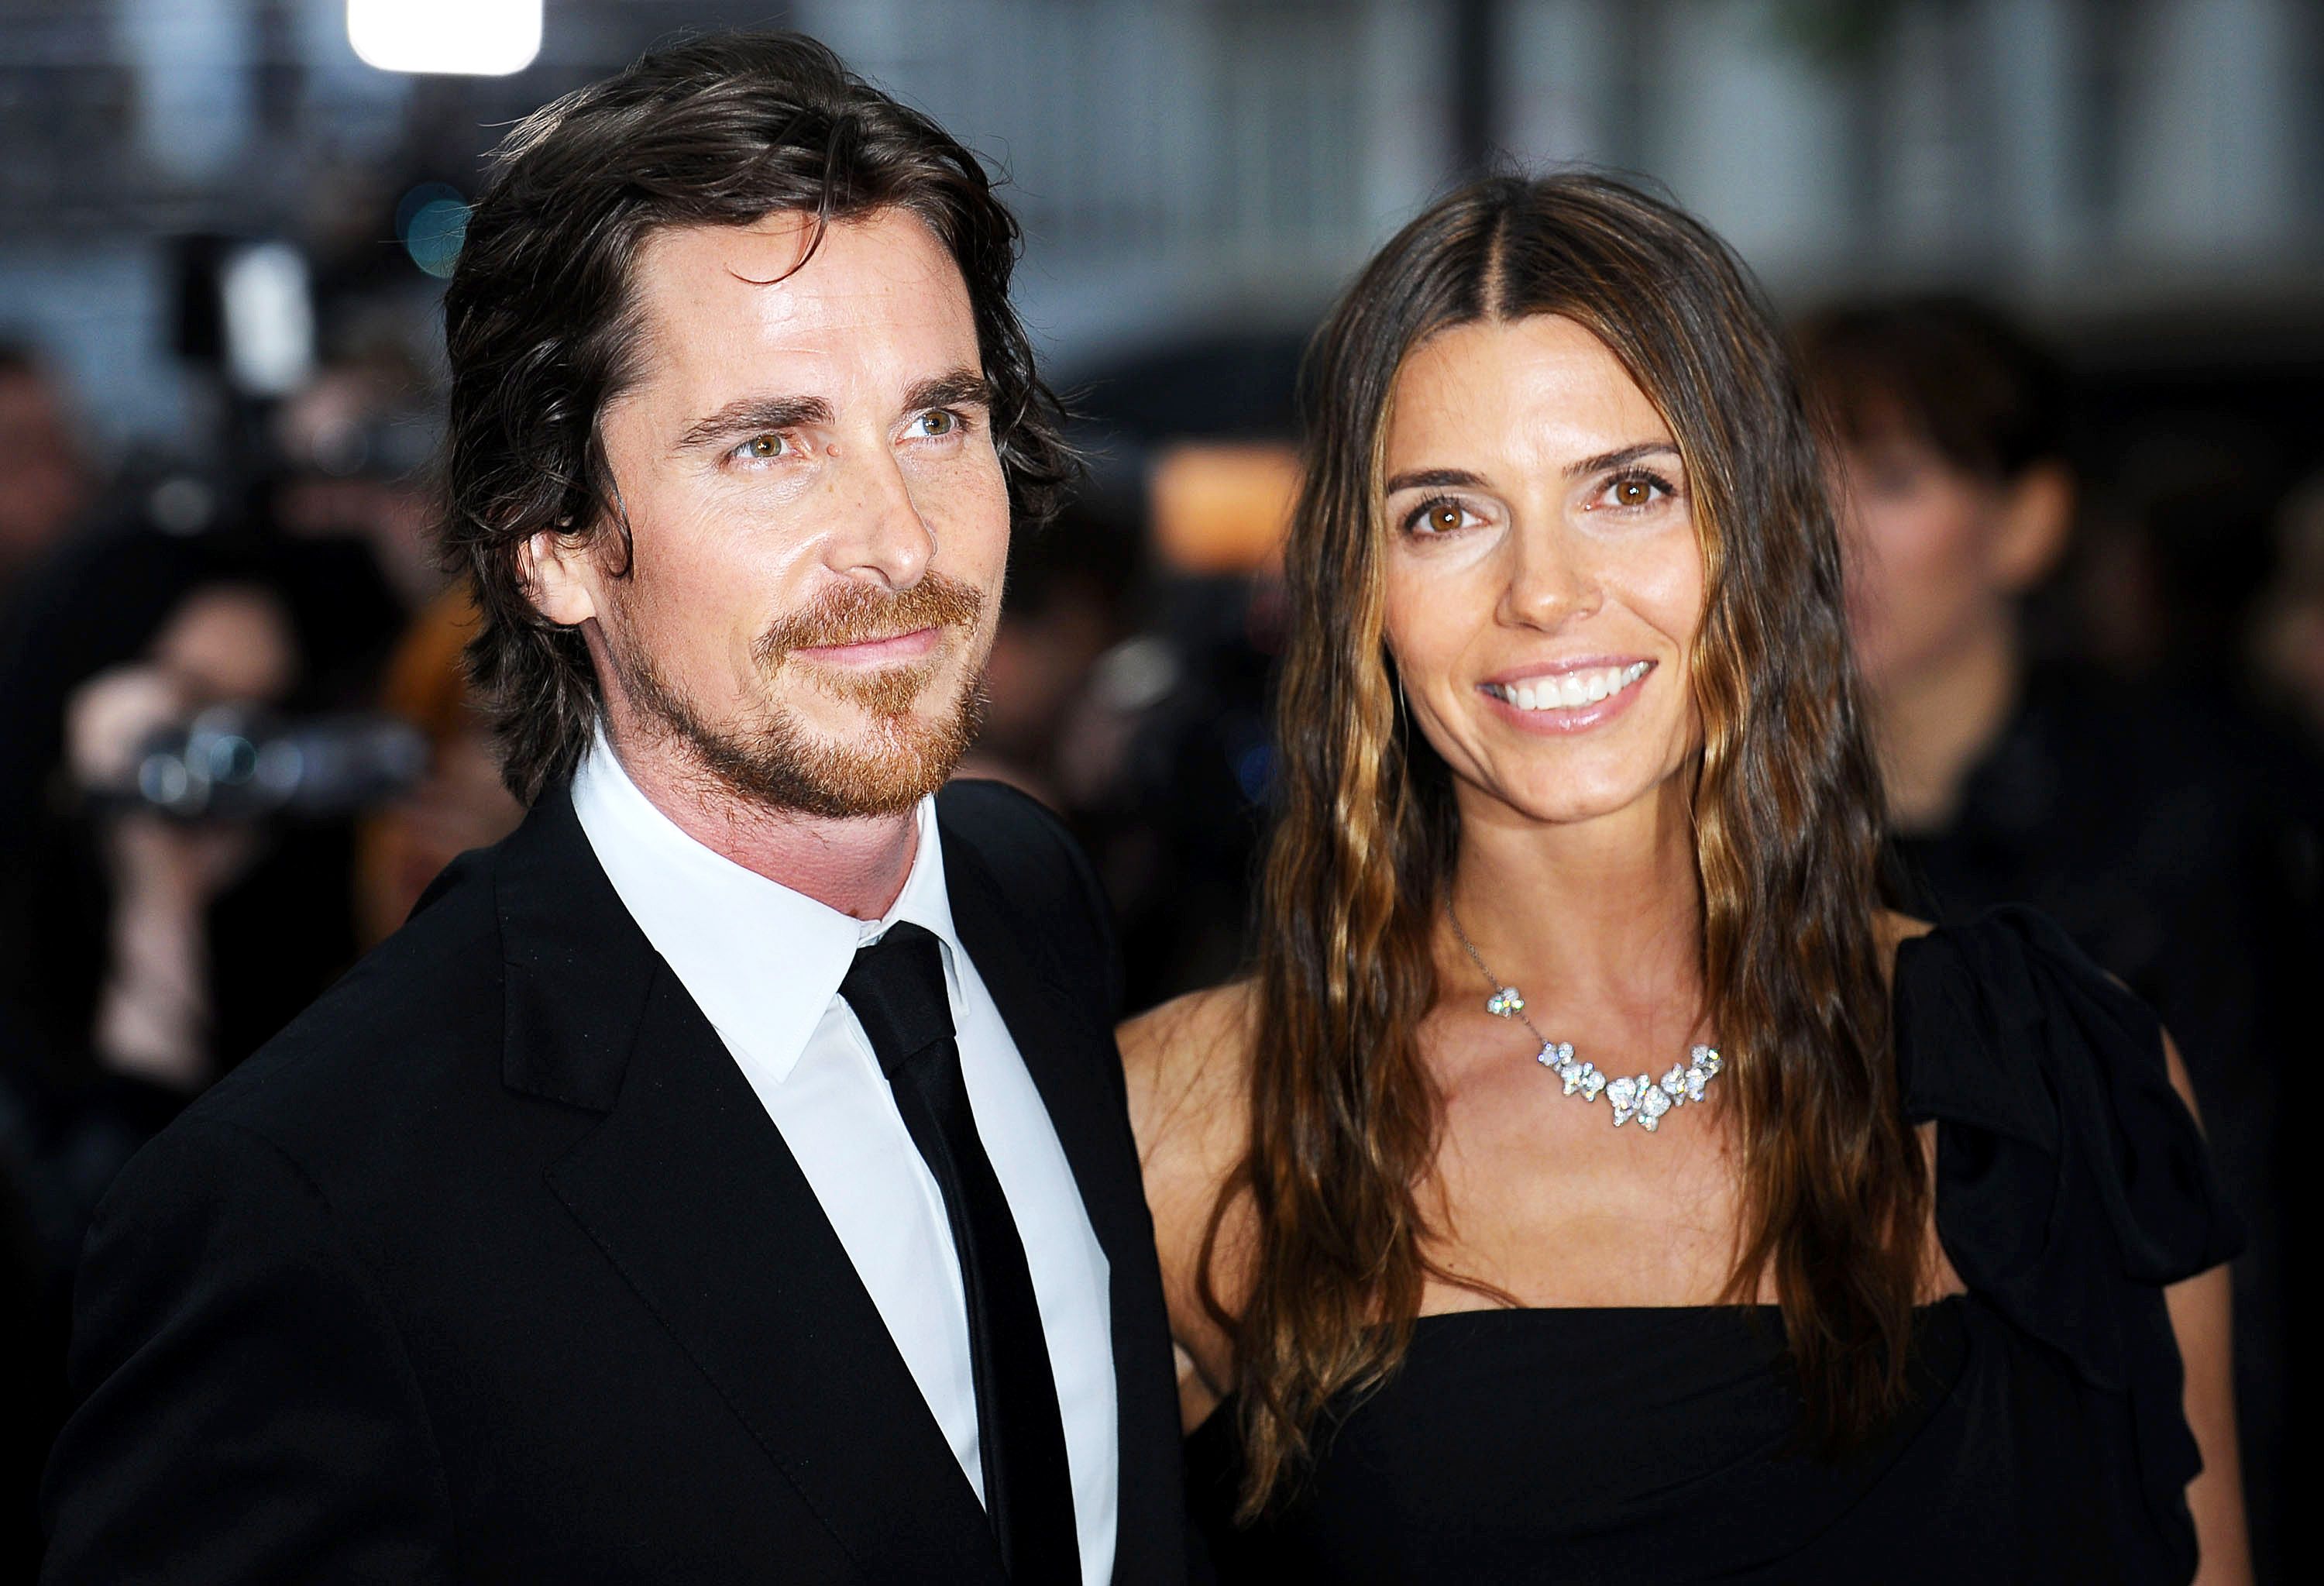 Christian Bale Sibi Blazic